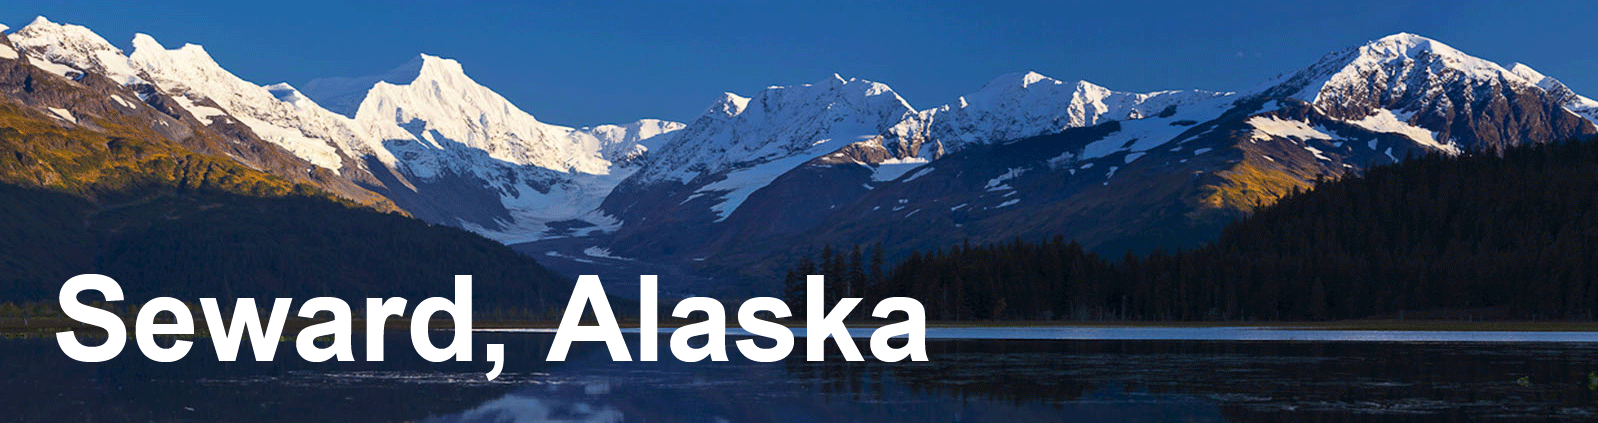 https://atlasvirtualvisit.web.cern.ch/sites/atlasvirtualvisit.web.cern.ch/files/Next-Alaska.png